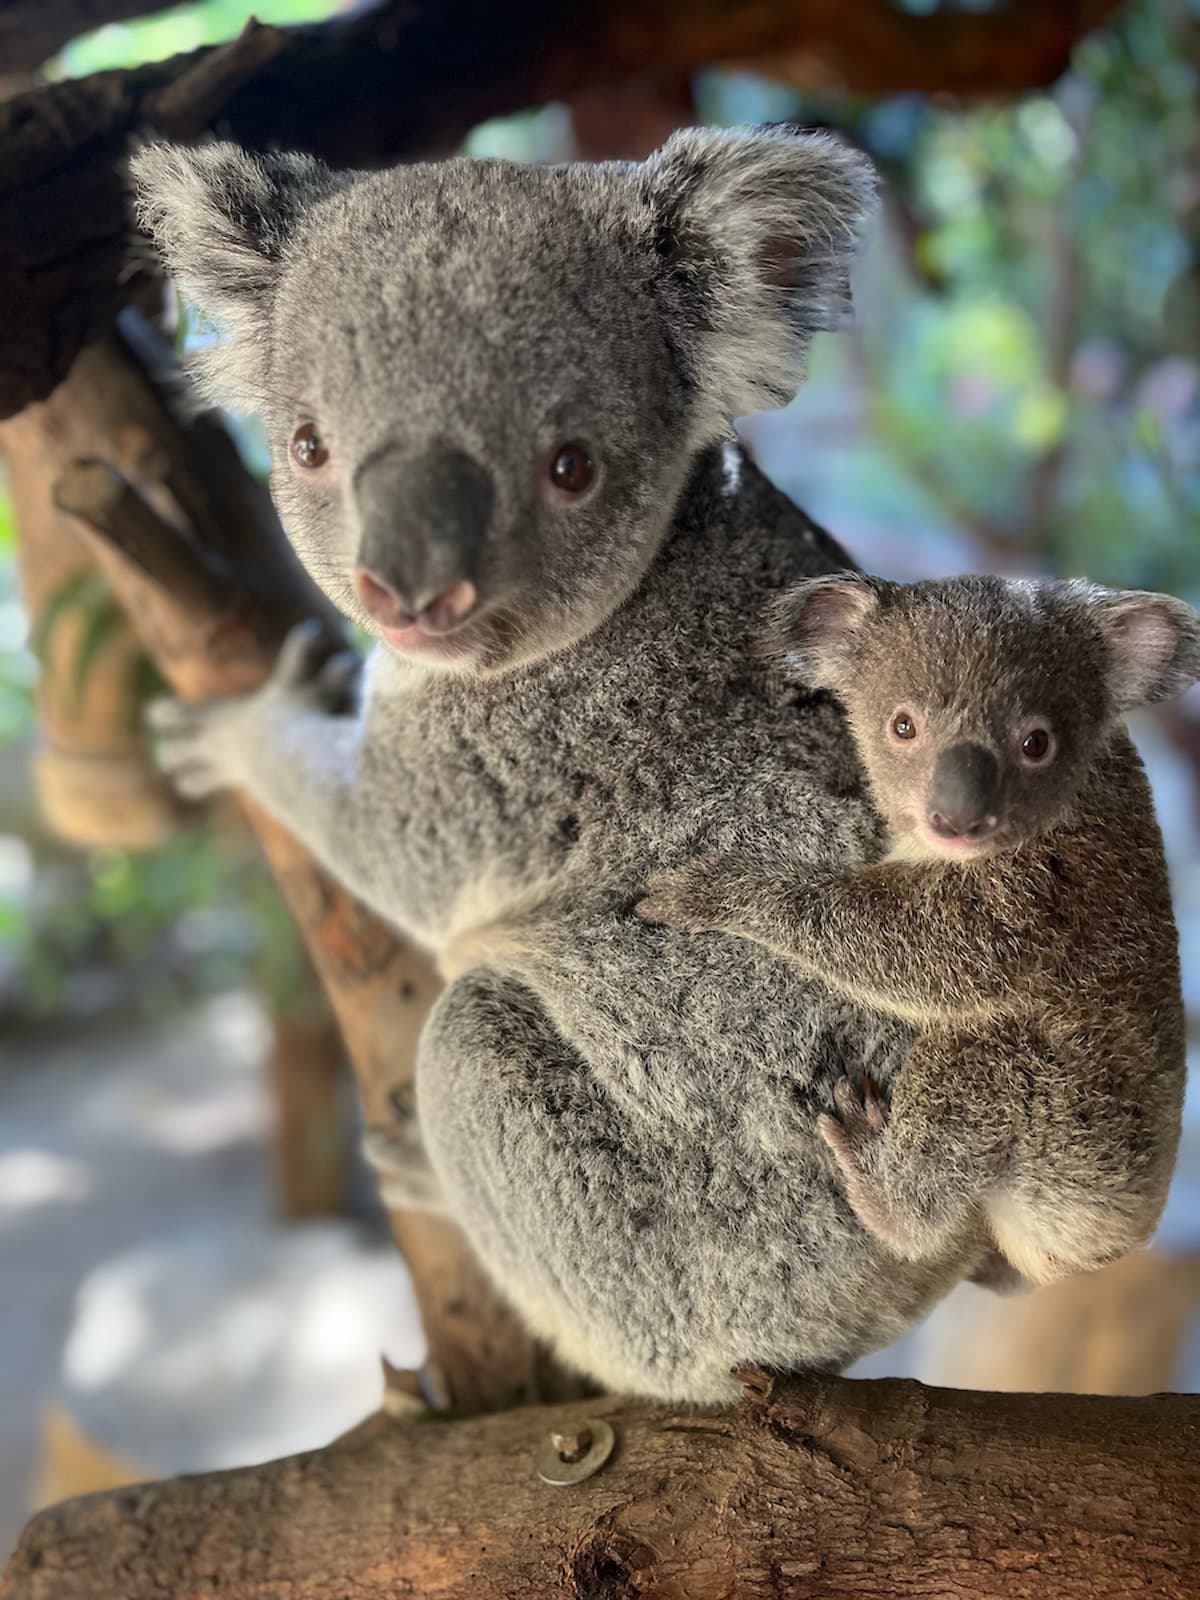 Female koala Maya with male koala joey